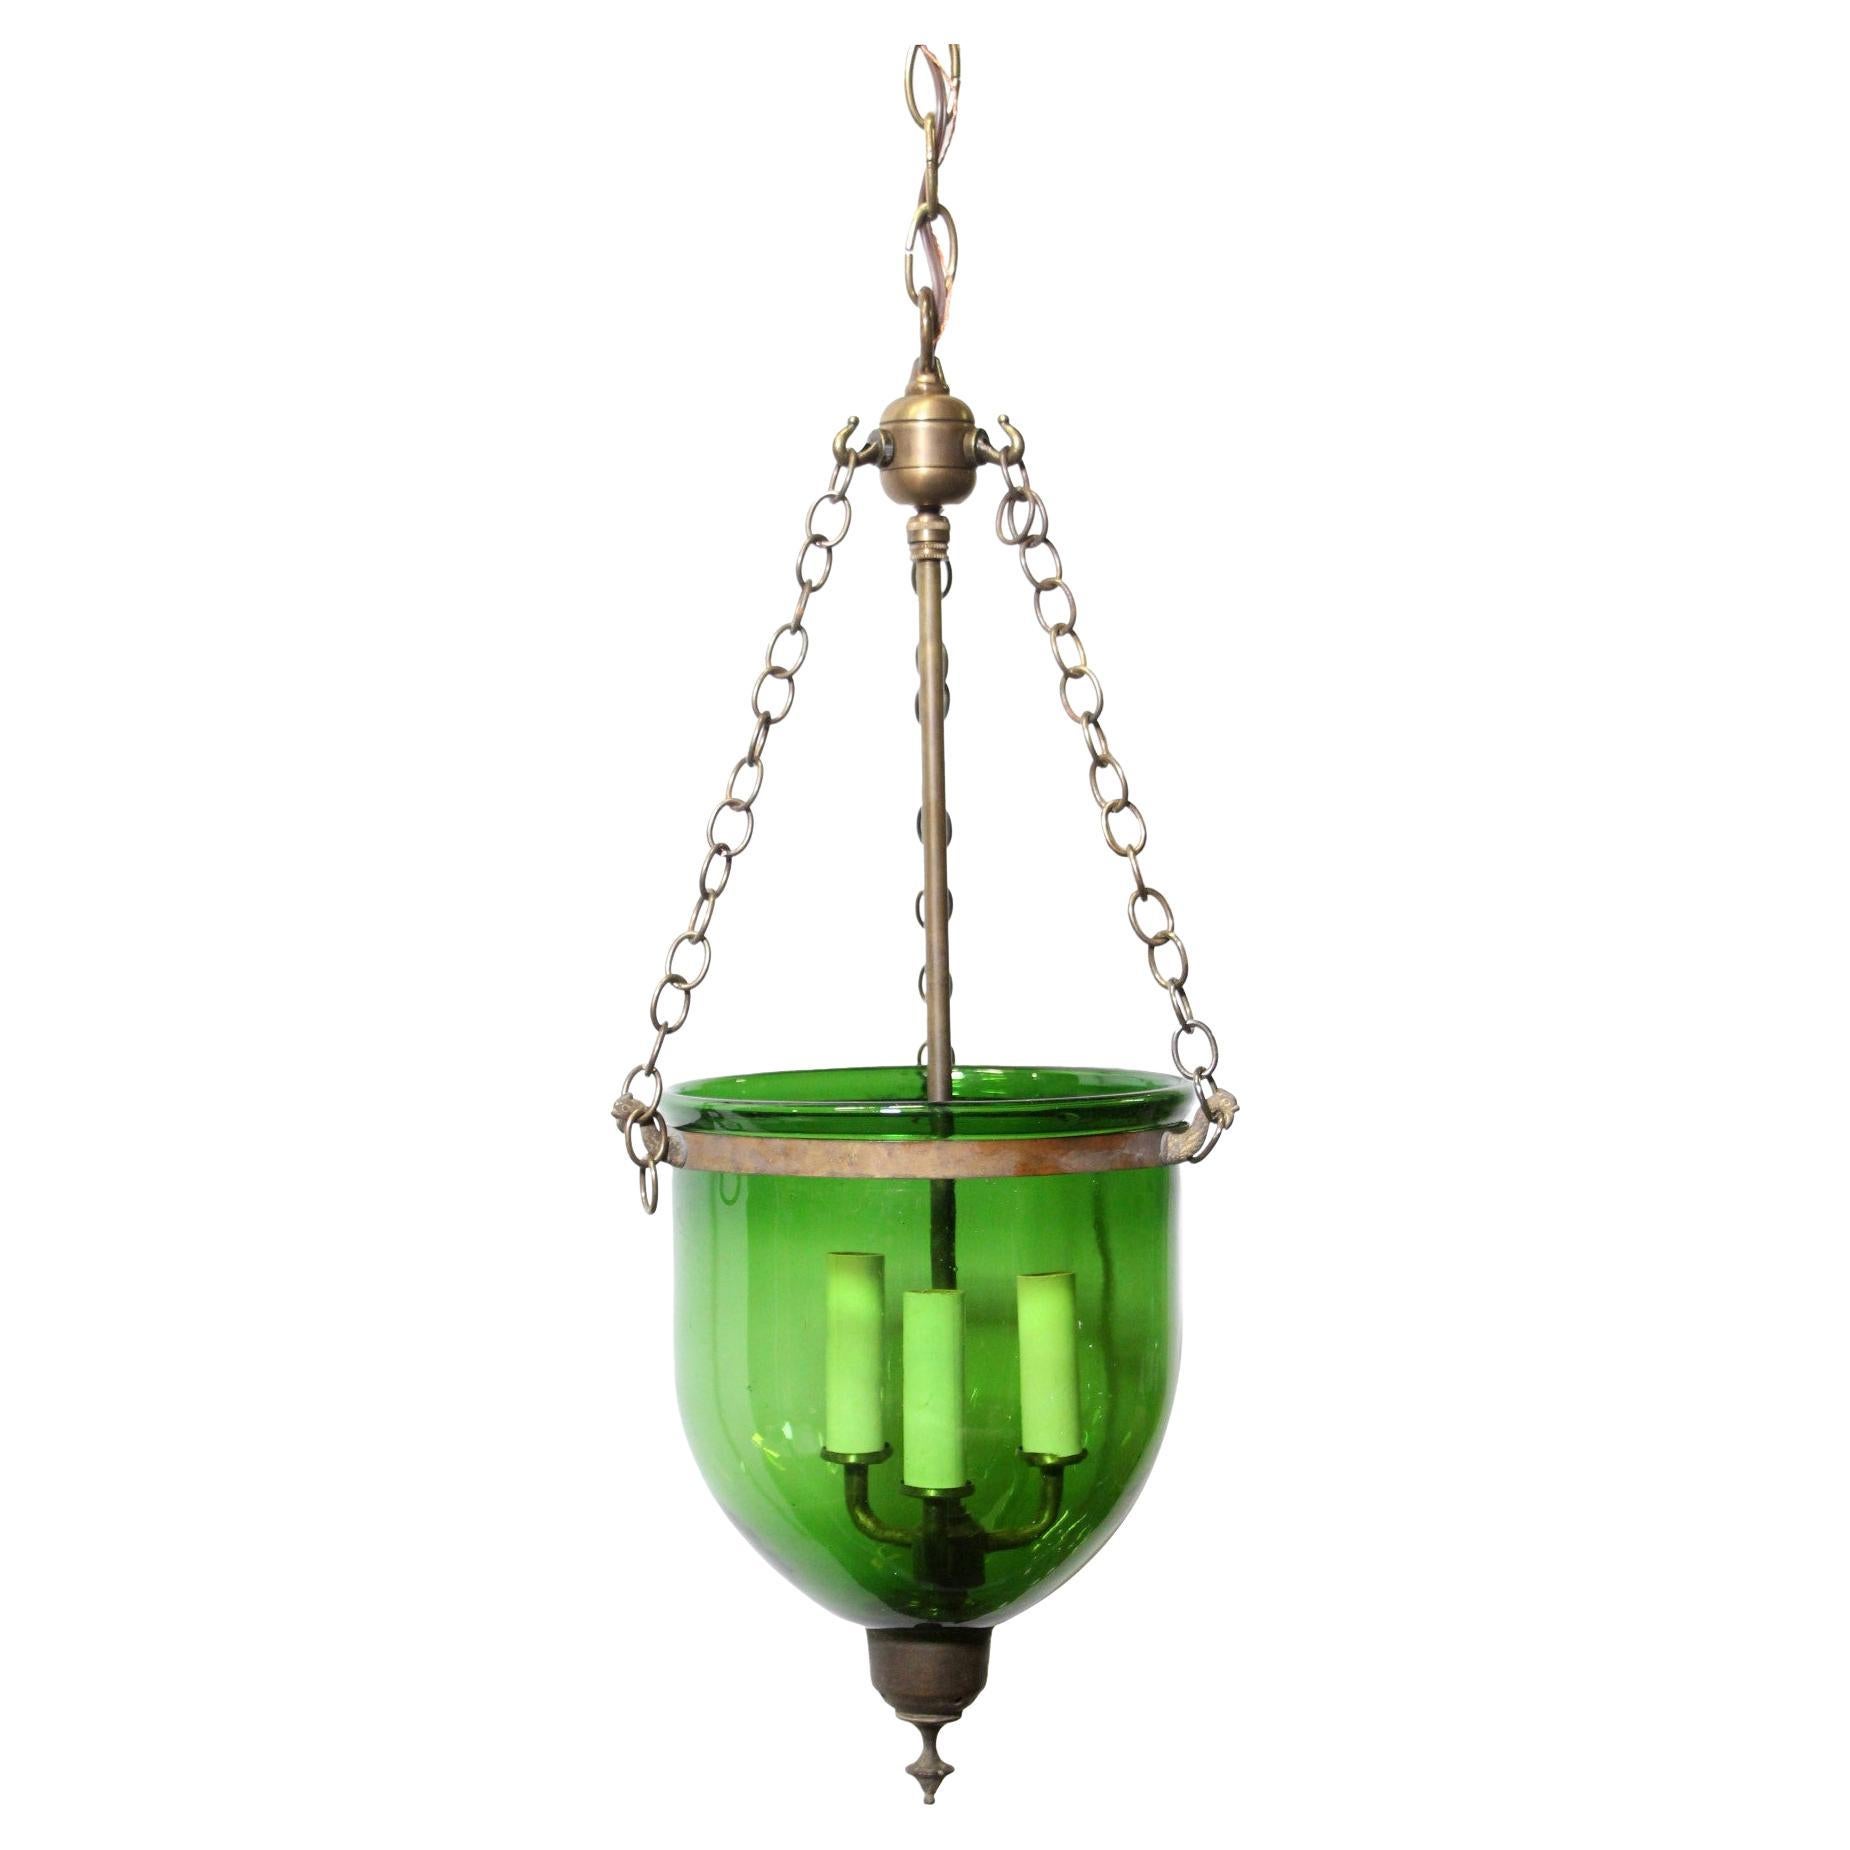 Antique Green Glass Bell Jar Light with Brass Hardware